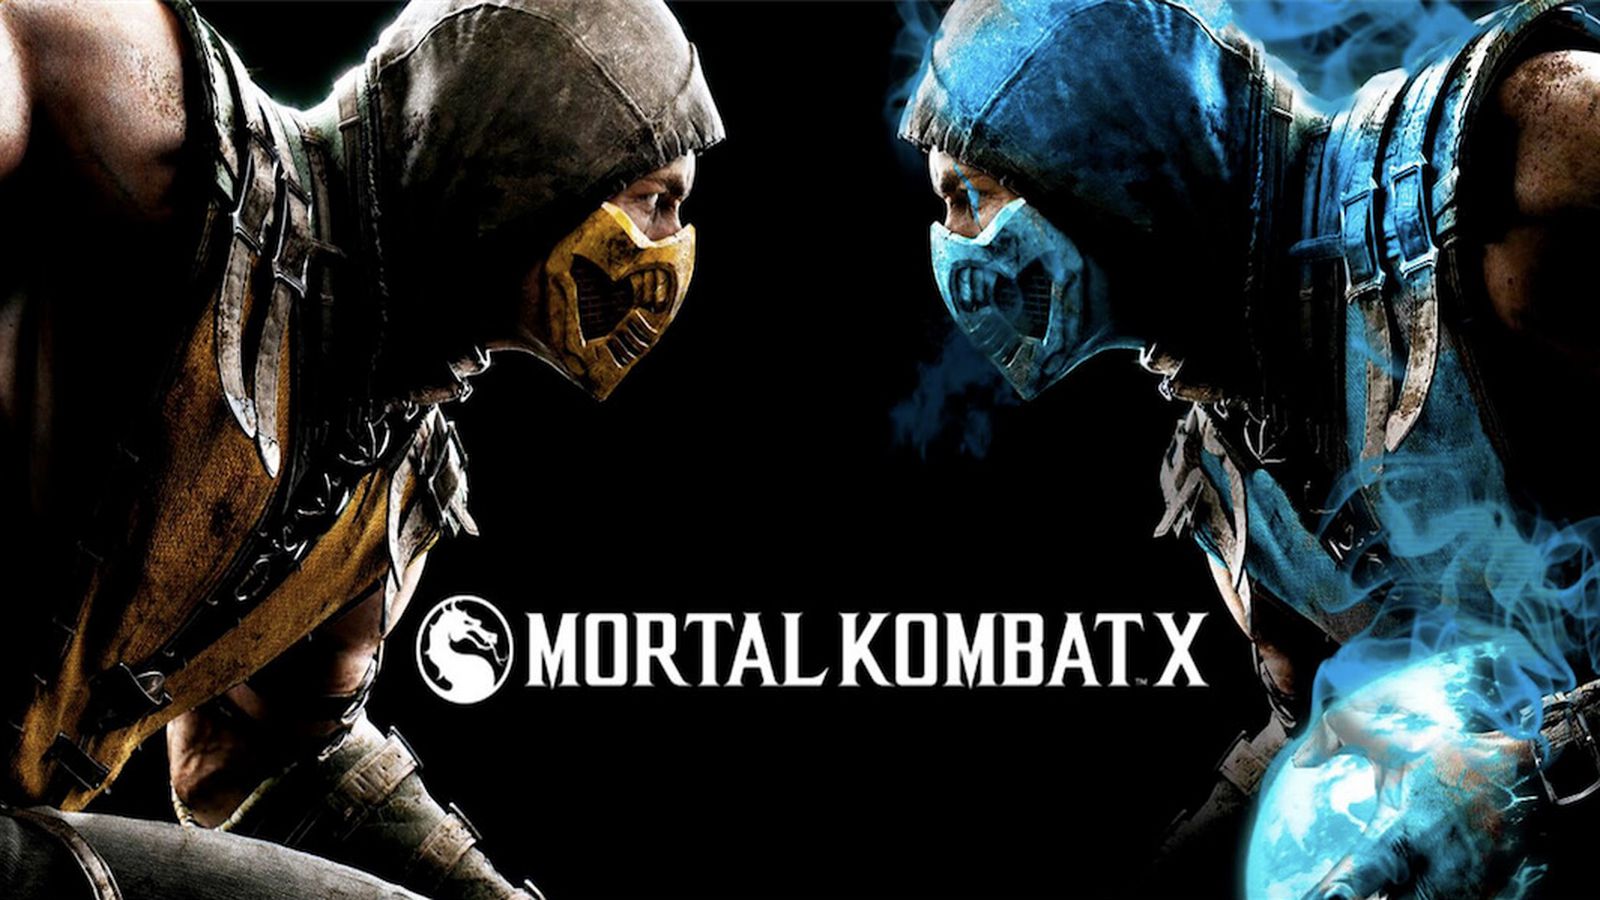 Mortal Kombat X Free PC Game Full Version Free Download Android iOS